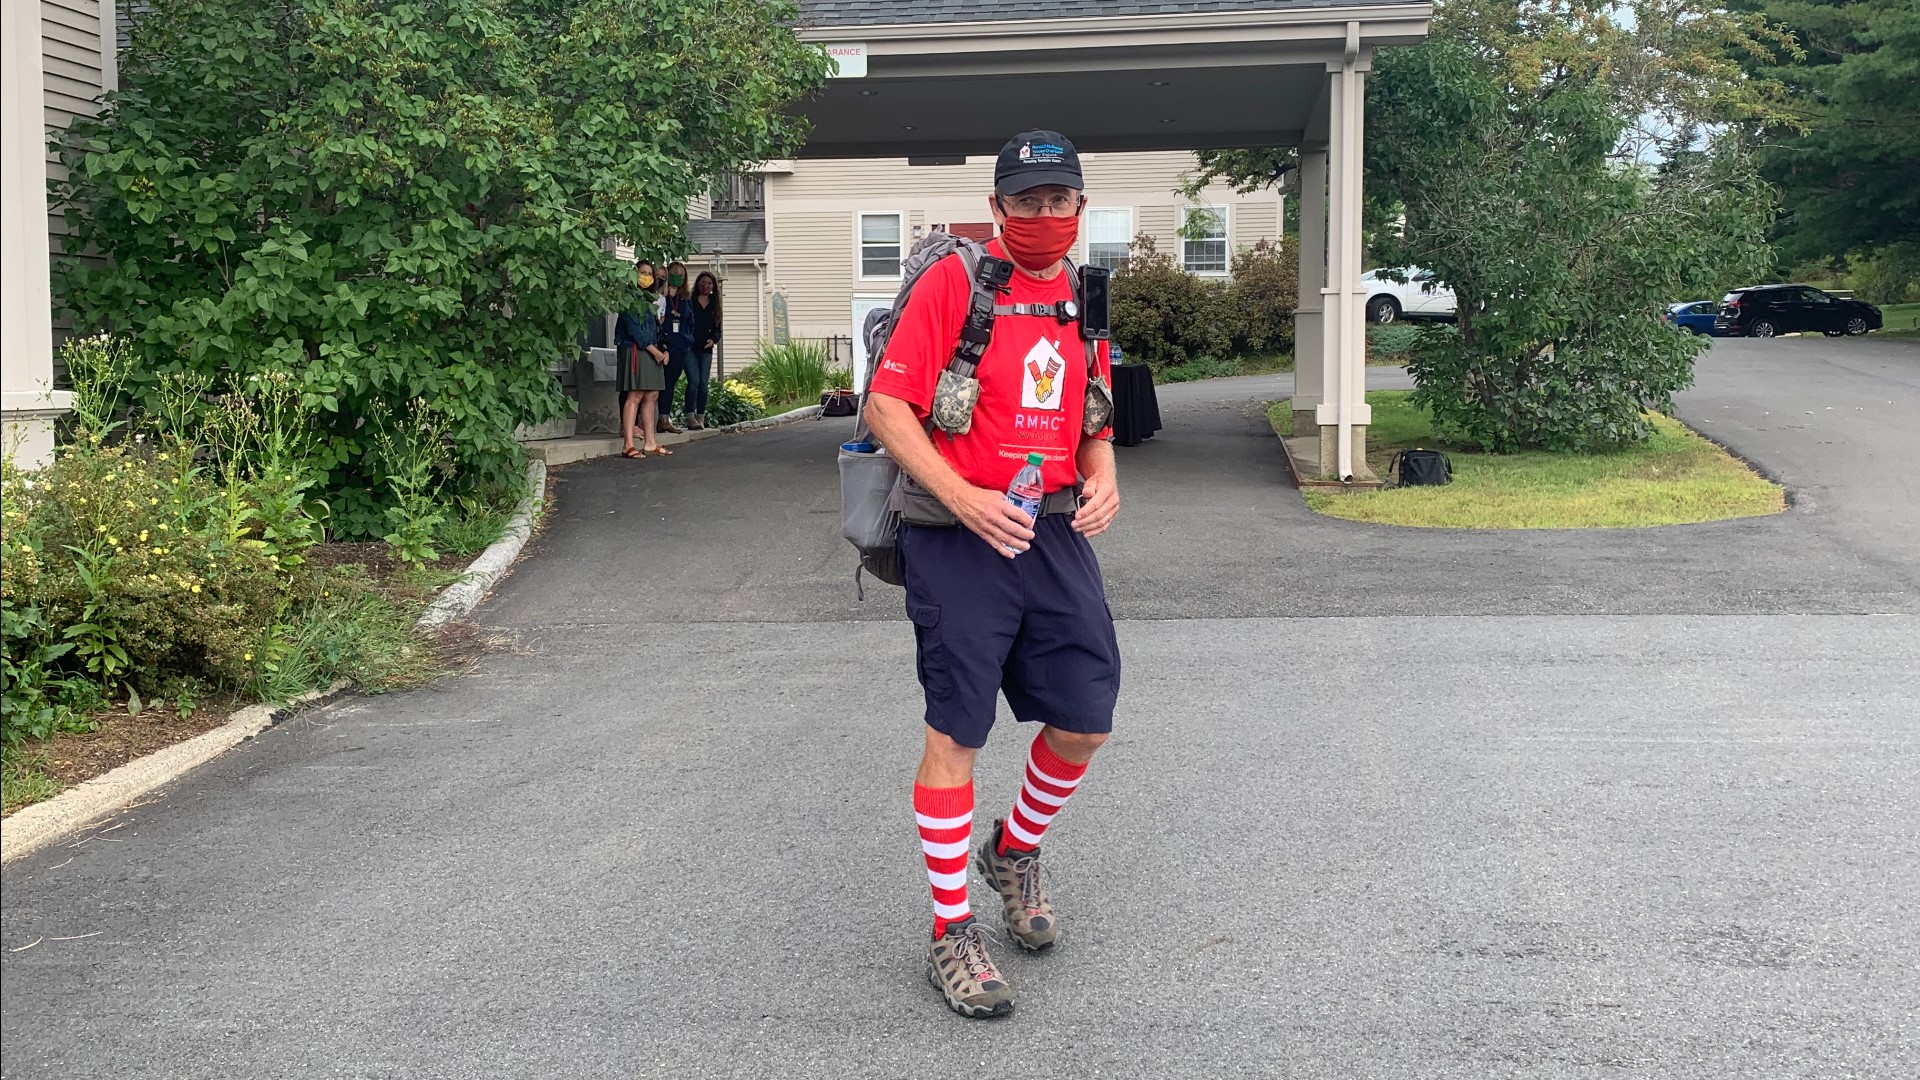 NH man walking 1,000 miles through New England to raise awareness and money for Ronald McDonald House